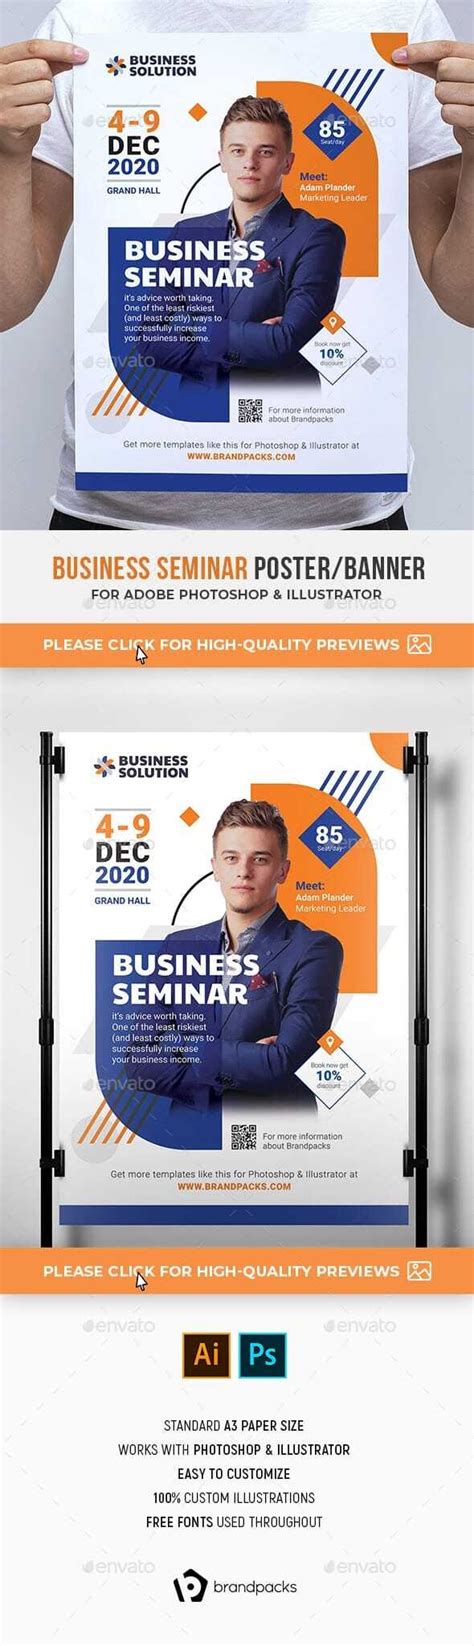 Business Seminar Posterbanner By Brandpacks Graphicriver